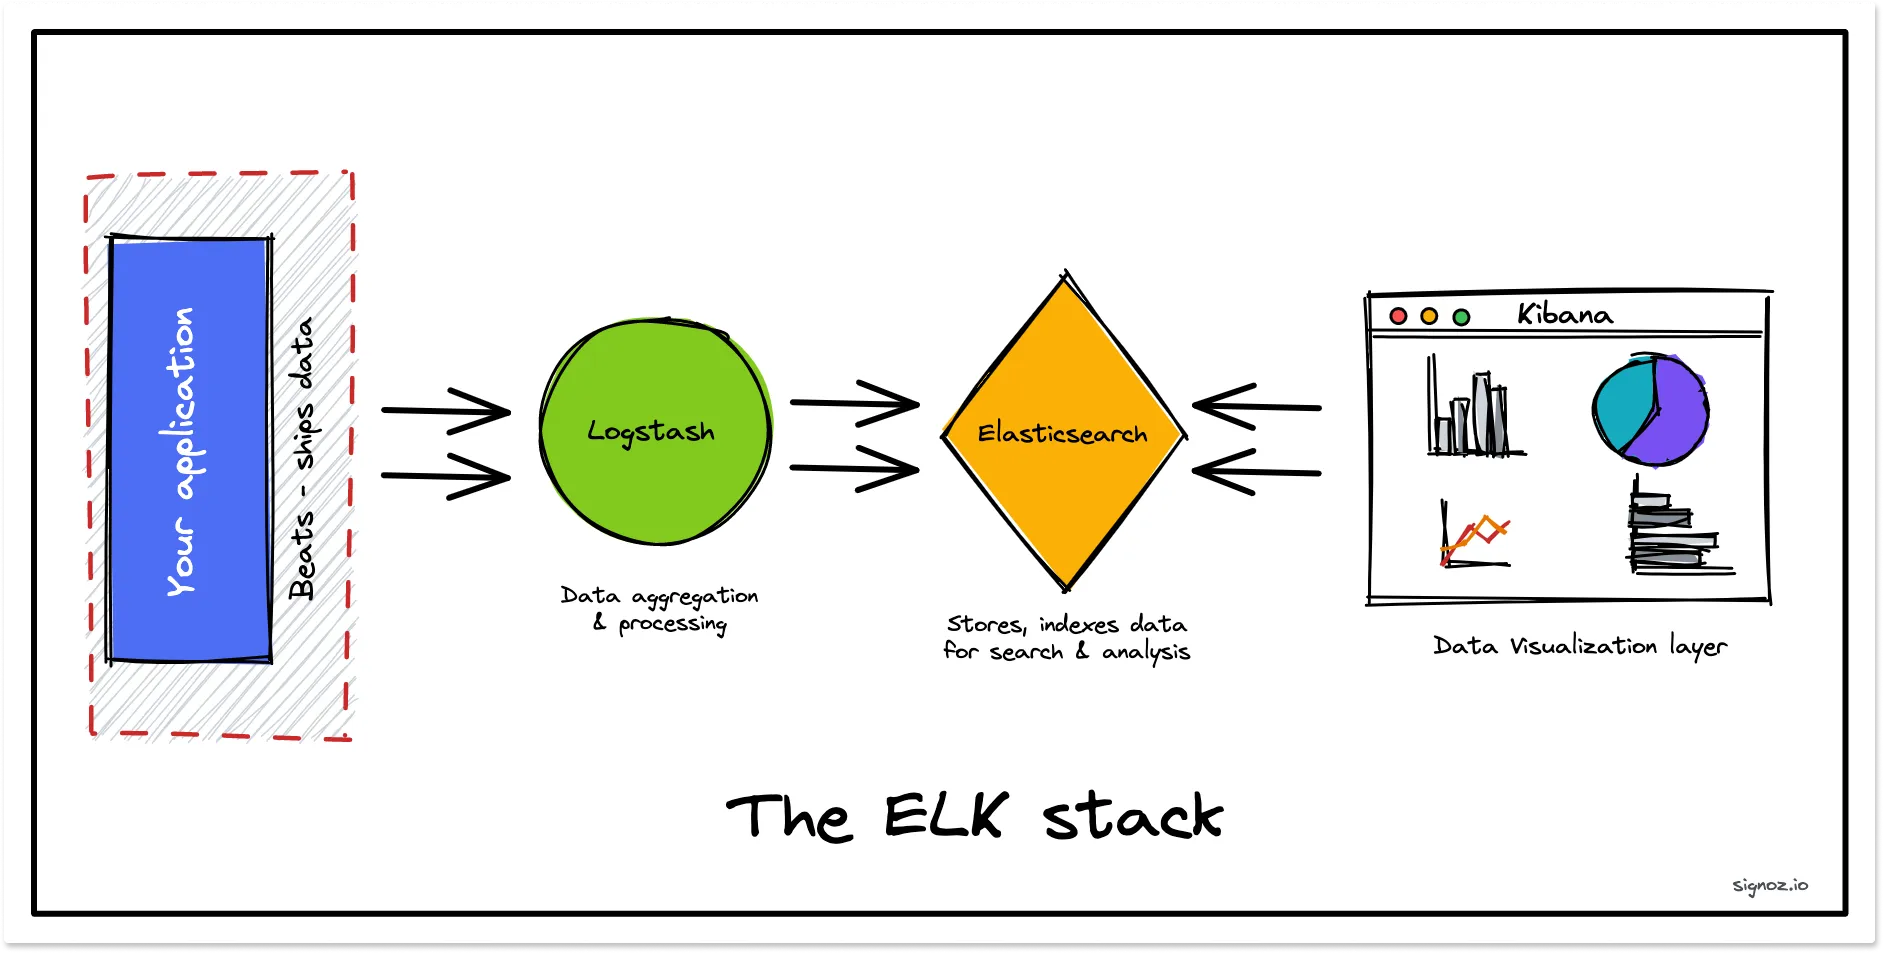 The Elasticsearch stack